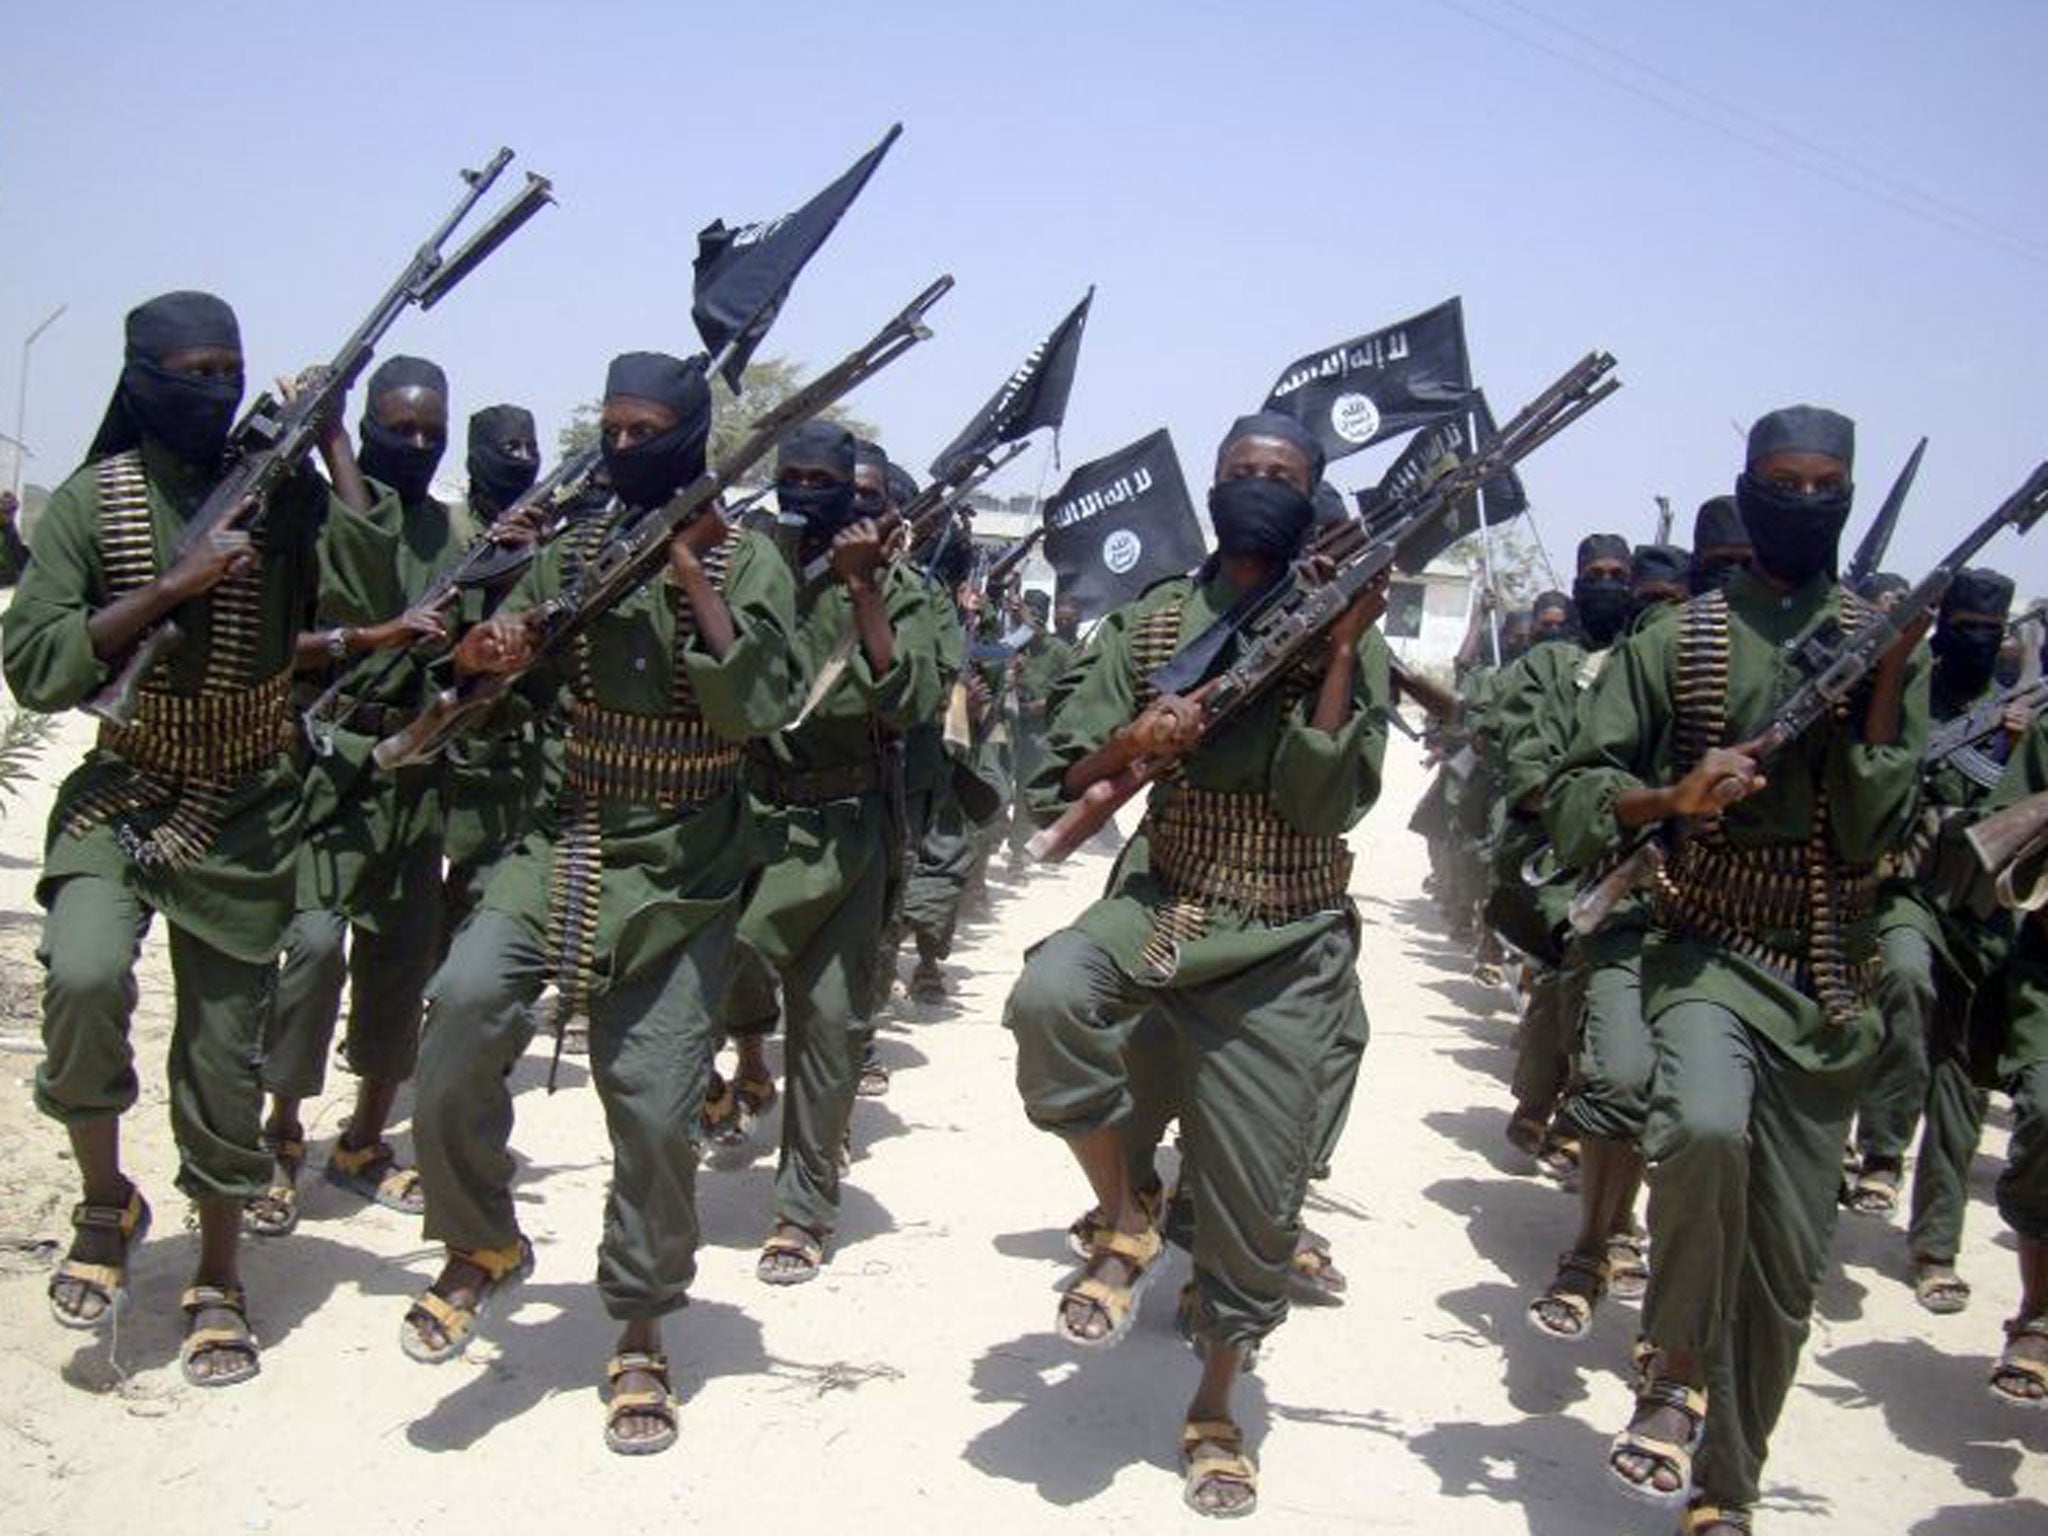 Al-Shabaab fighters still pose a serious threat, despite recent losses